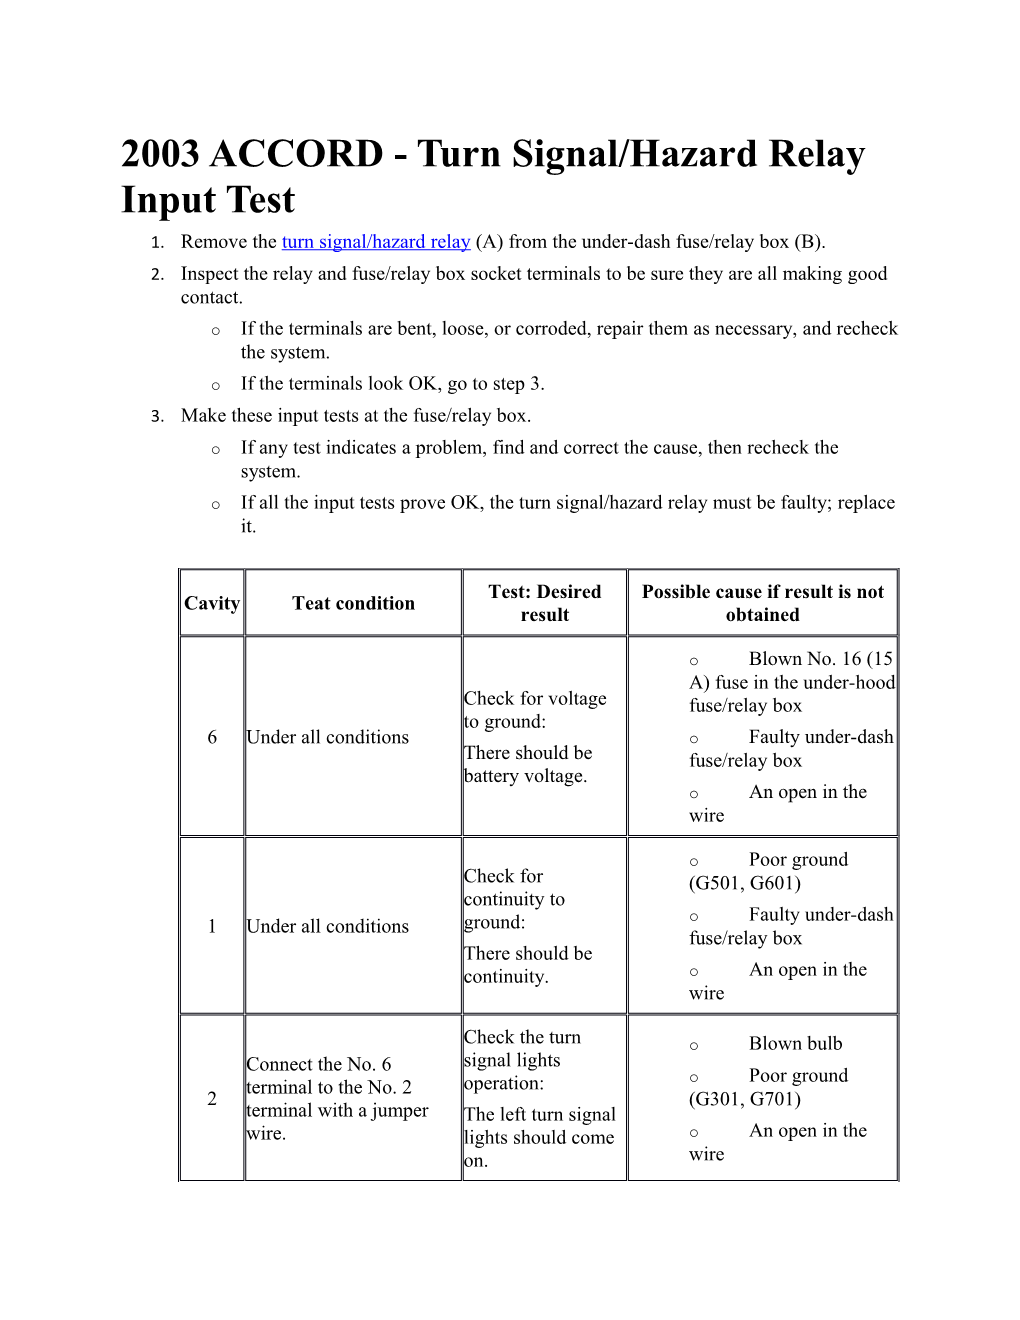 2003 ACCORD - Turn Signal/Hazard Relay Input Test